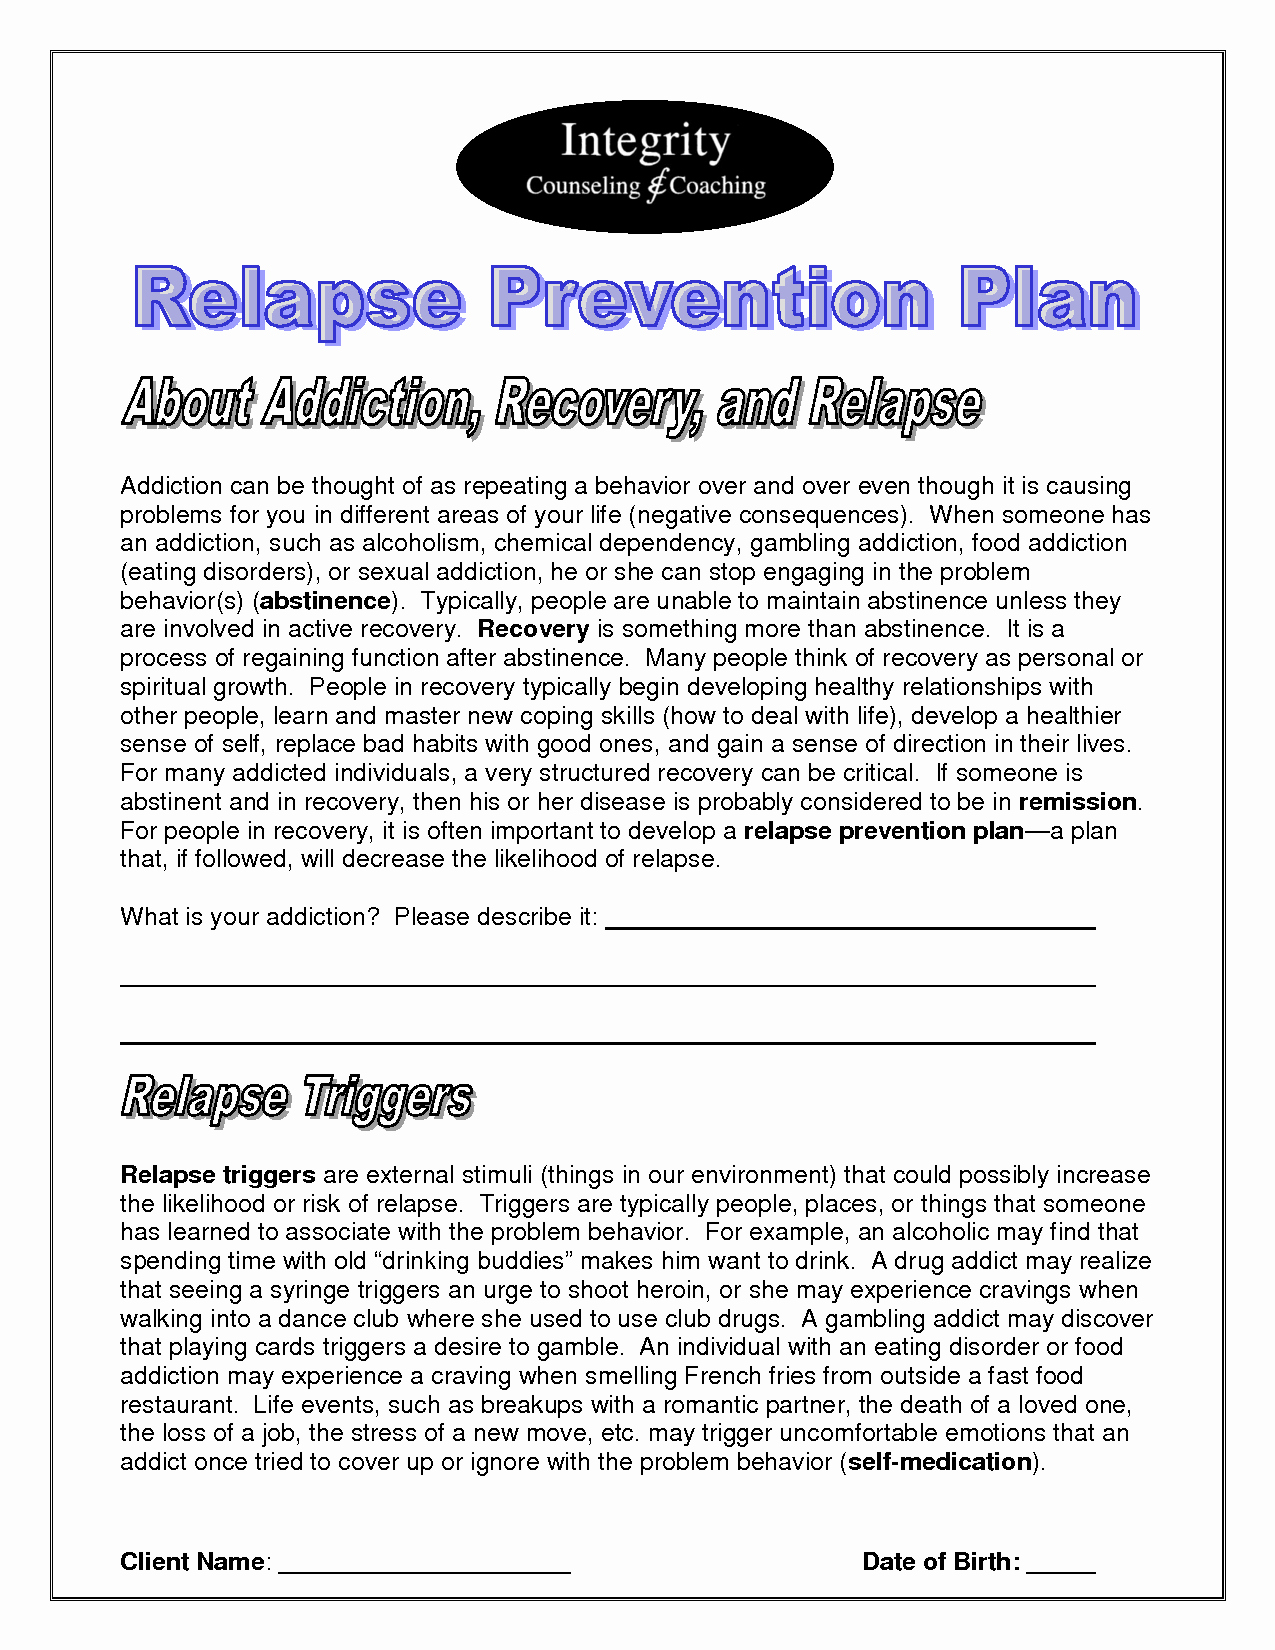 Relapse Prevention Plan Template Pdf Unique Relapse Prevention Plan Doc social Work